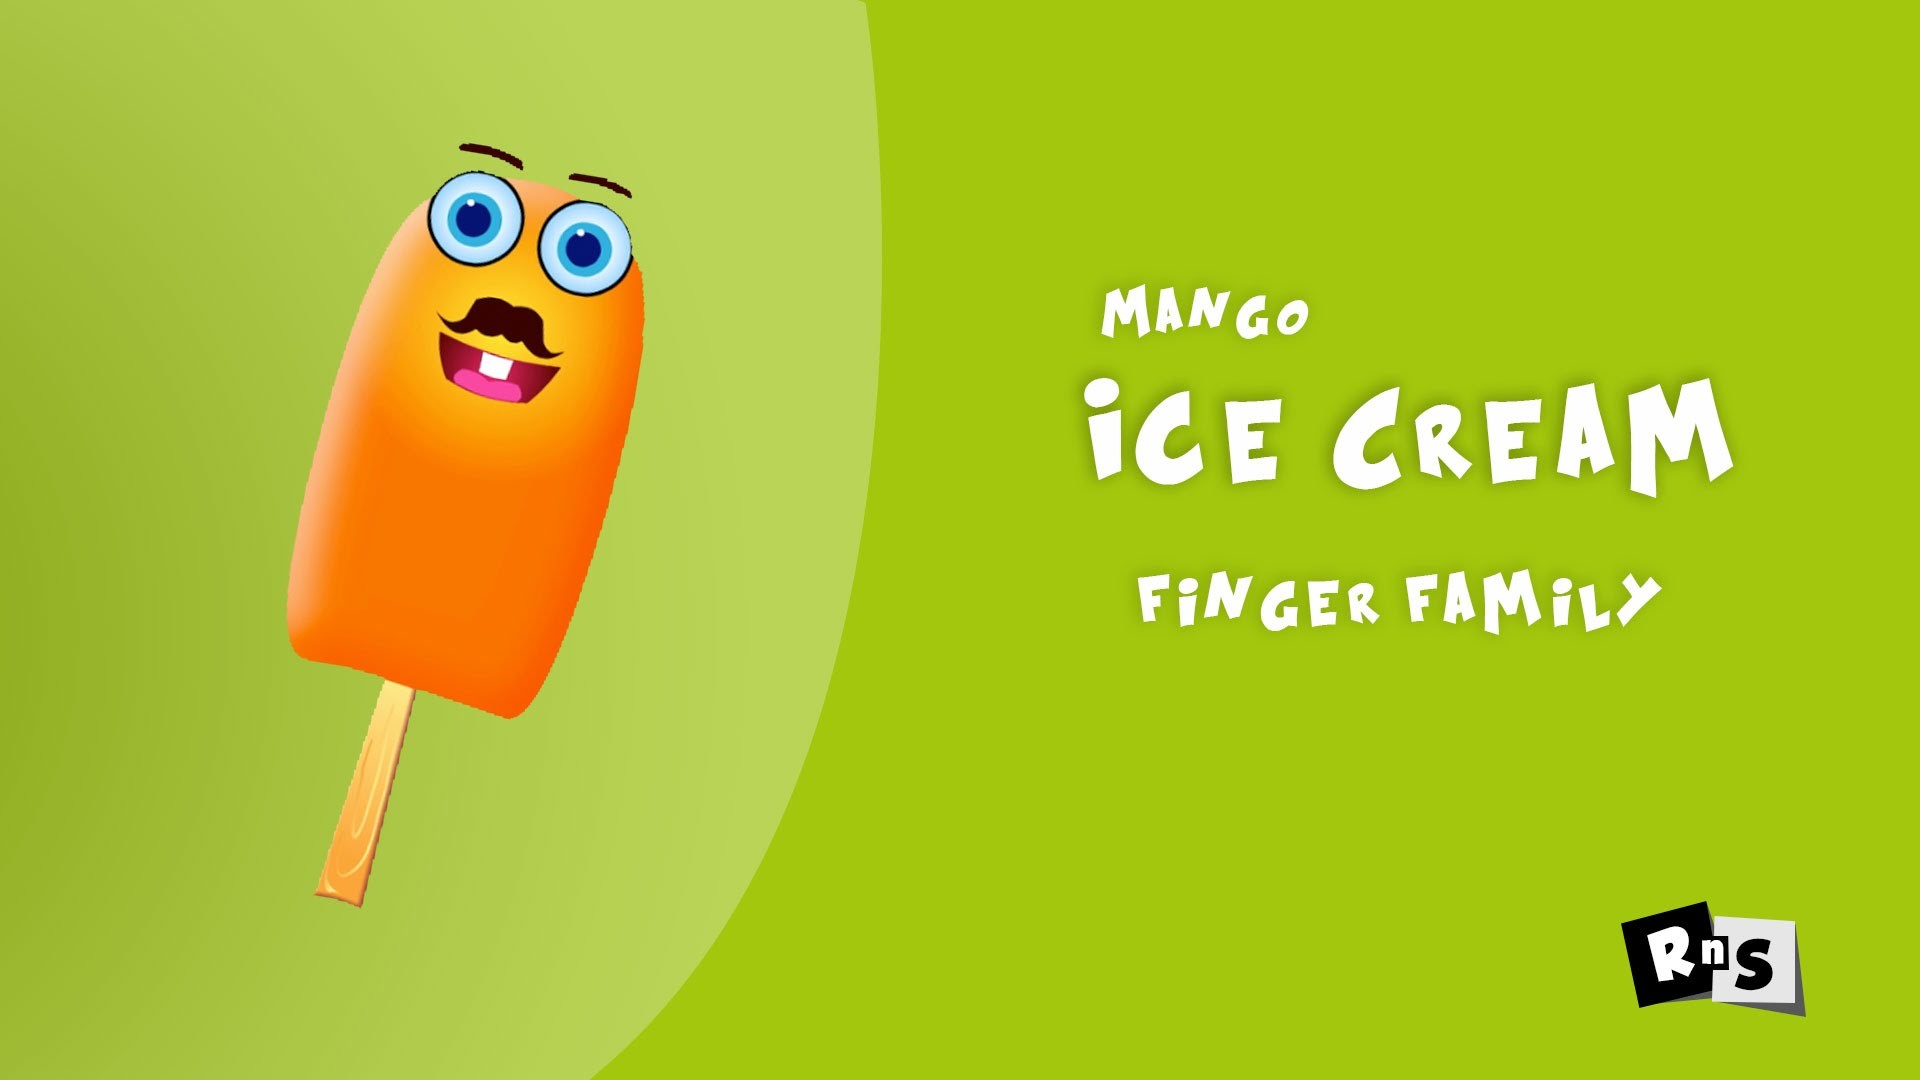 1920x1080 The Finger Family "Ice Cream Family" Nursery Rhyme | "Mango" Ice Cream  Finger Family Songs